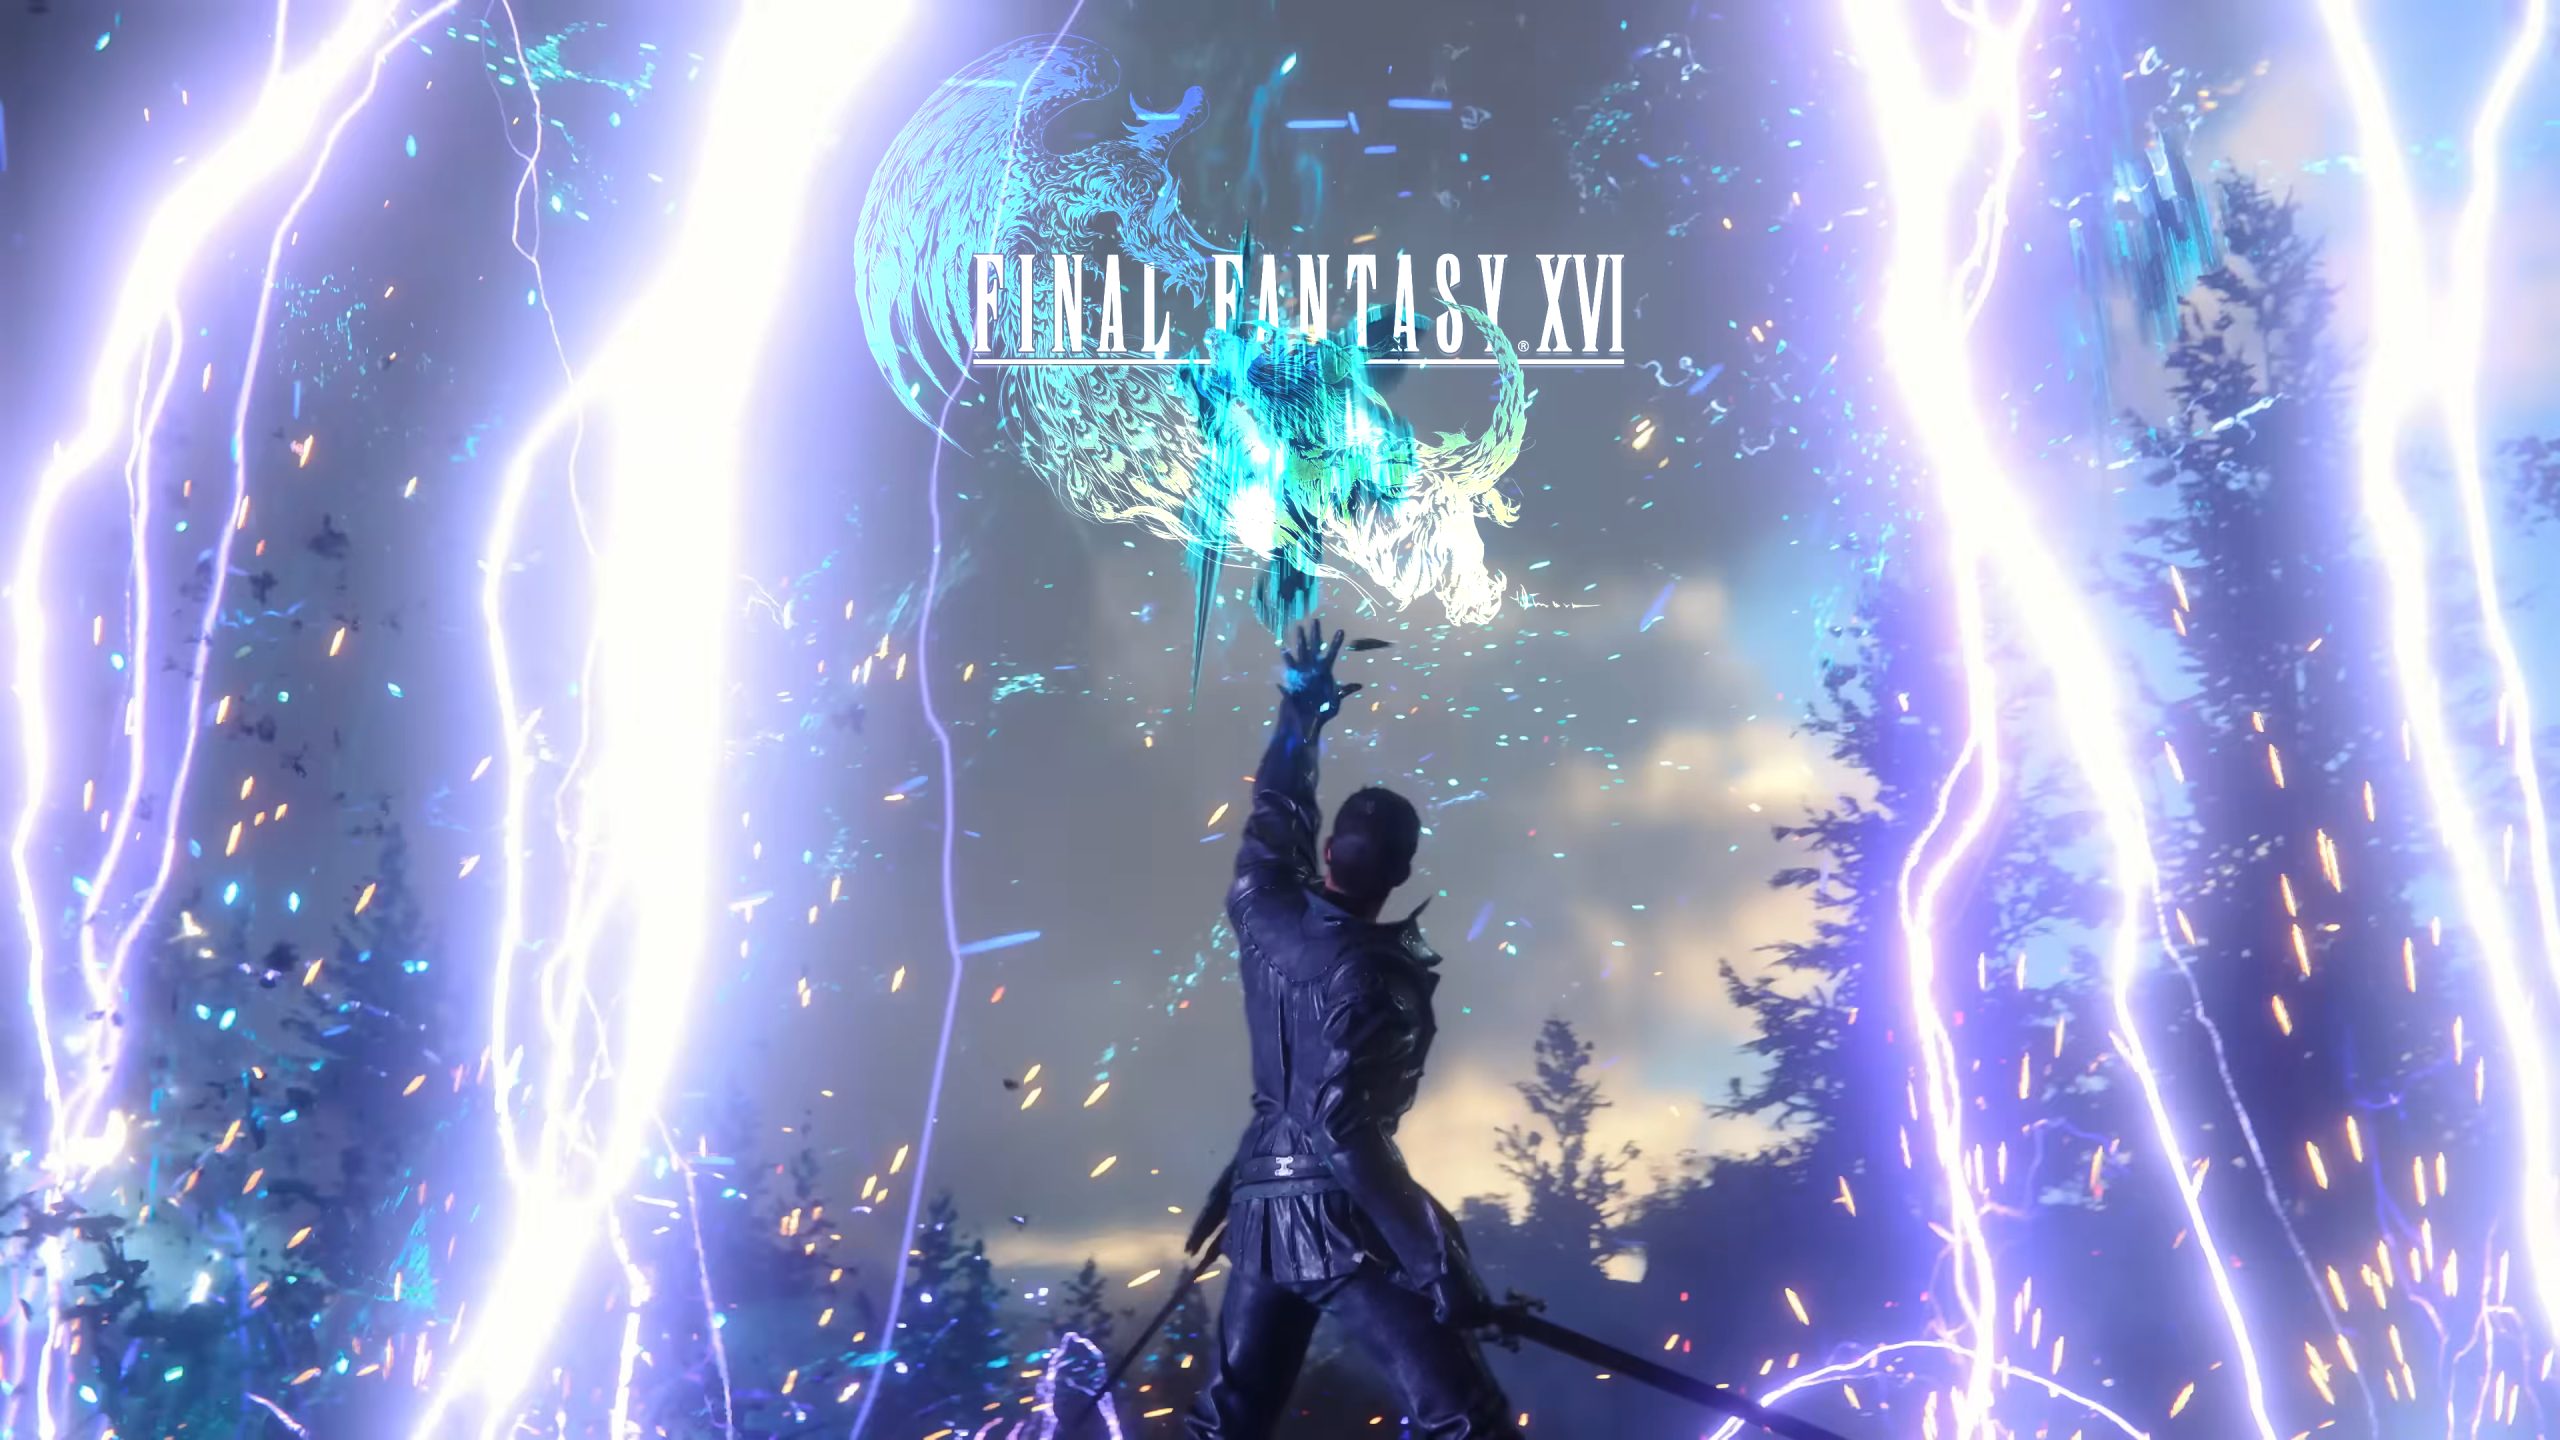 Final Fantasy XVI' PS5 Game Release Info